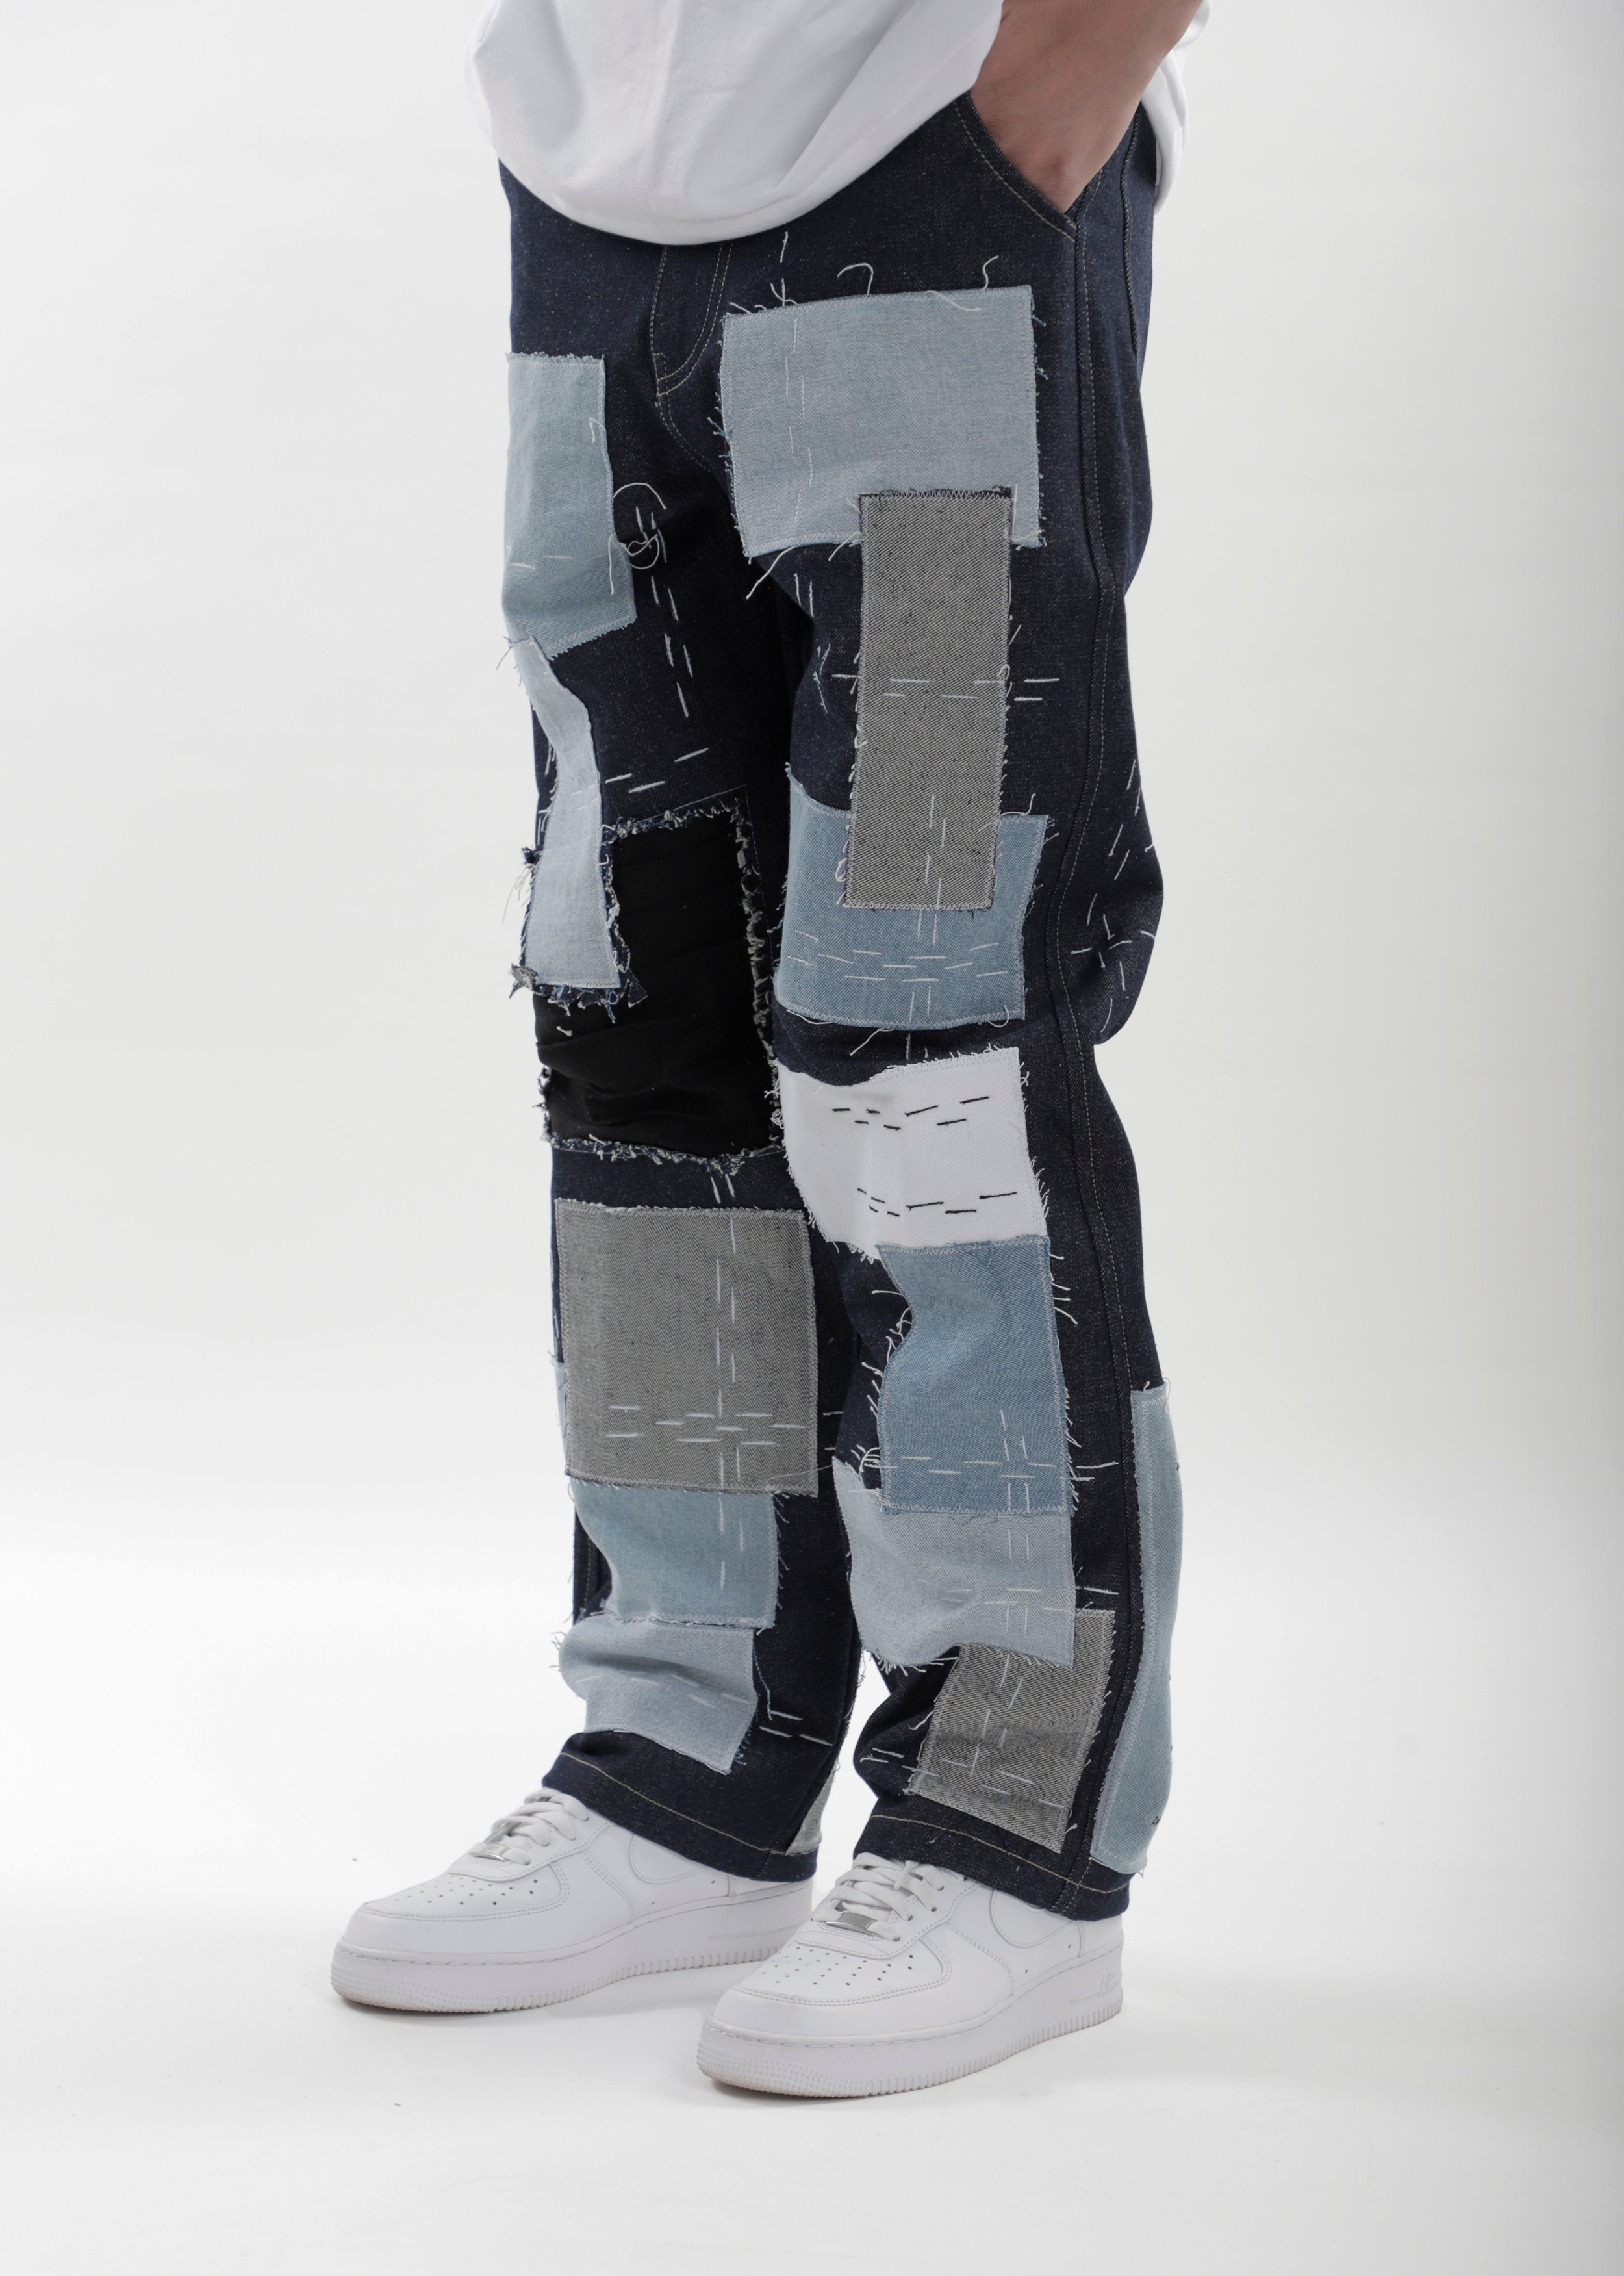 Sashiko Boro Jeans